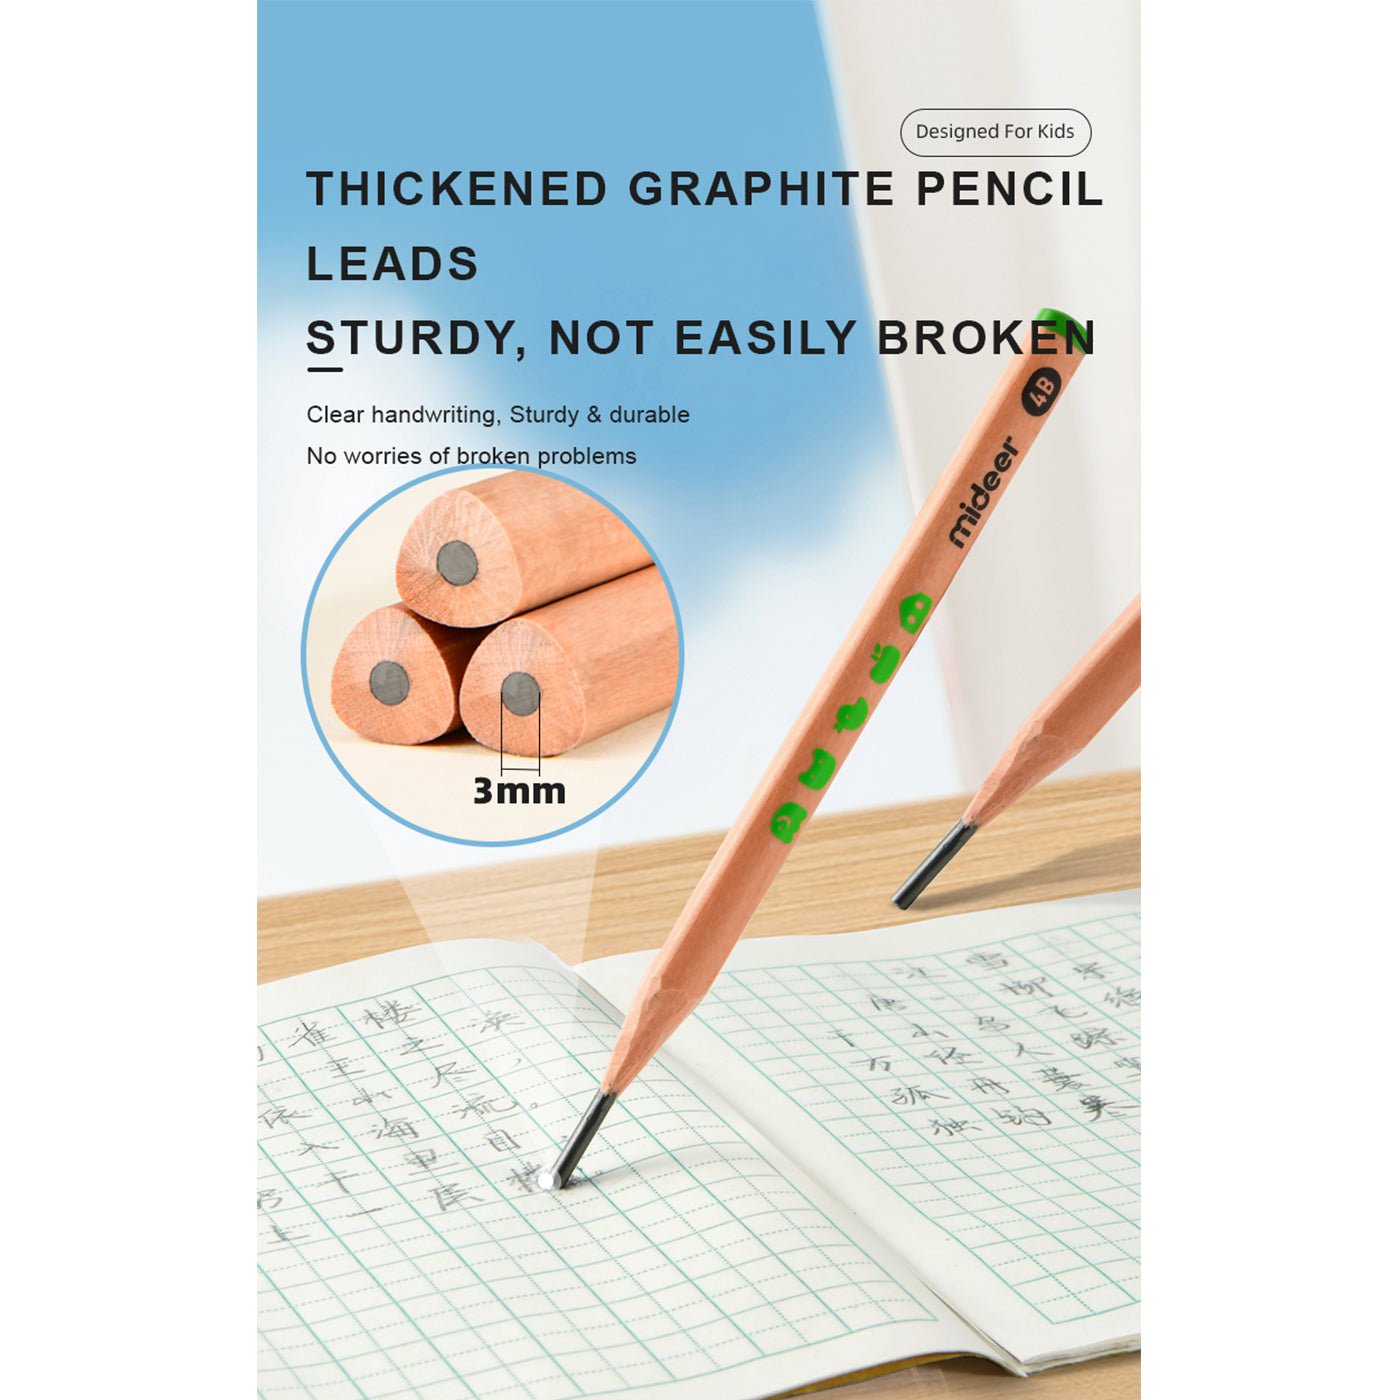 Thick Triangular Pencils - HB 30pcs - 0cm